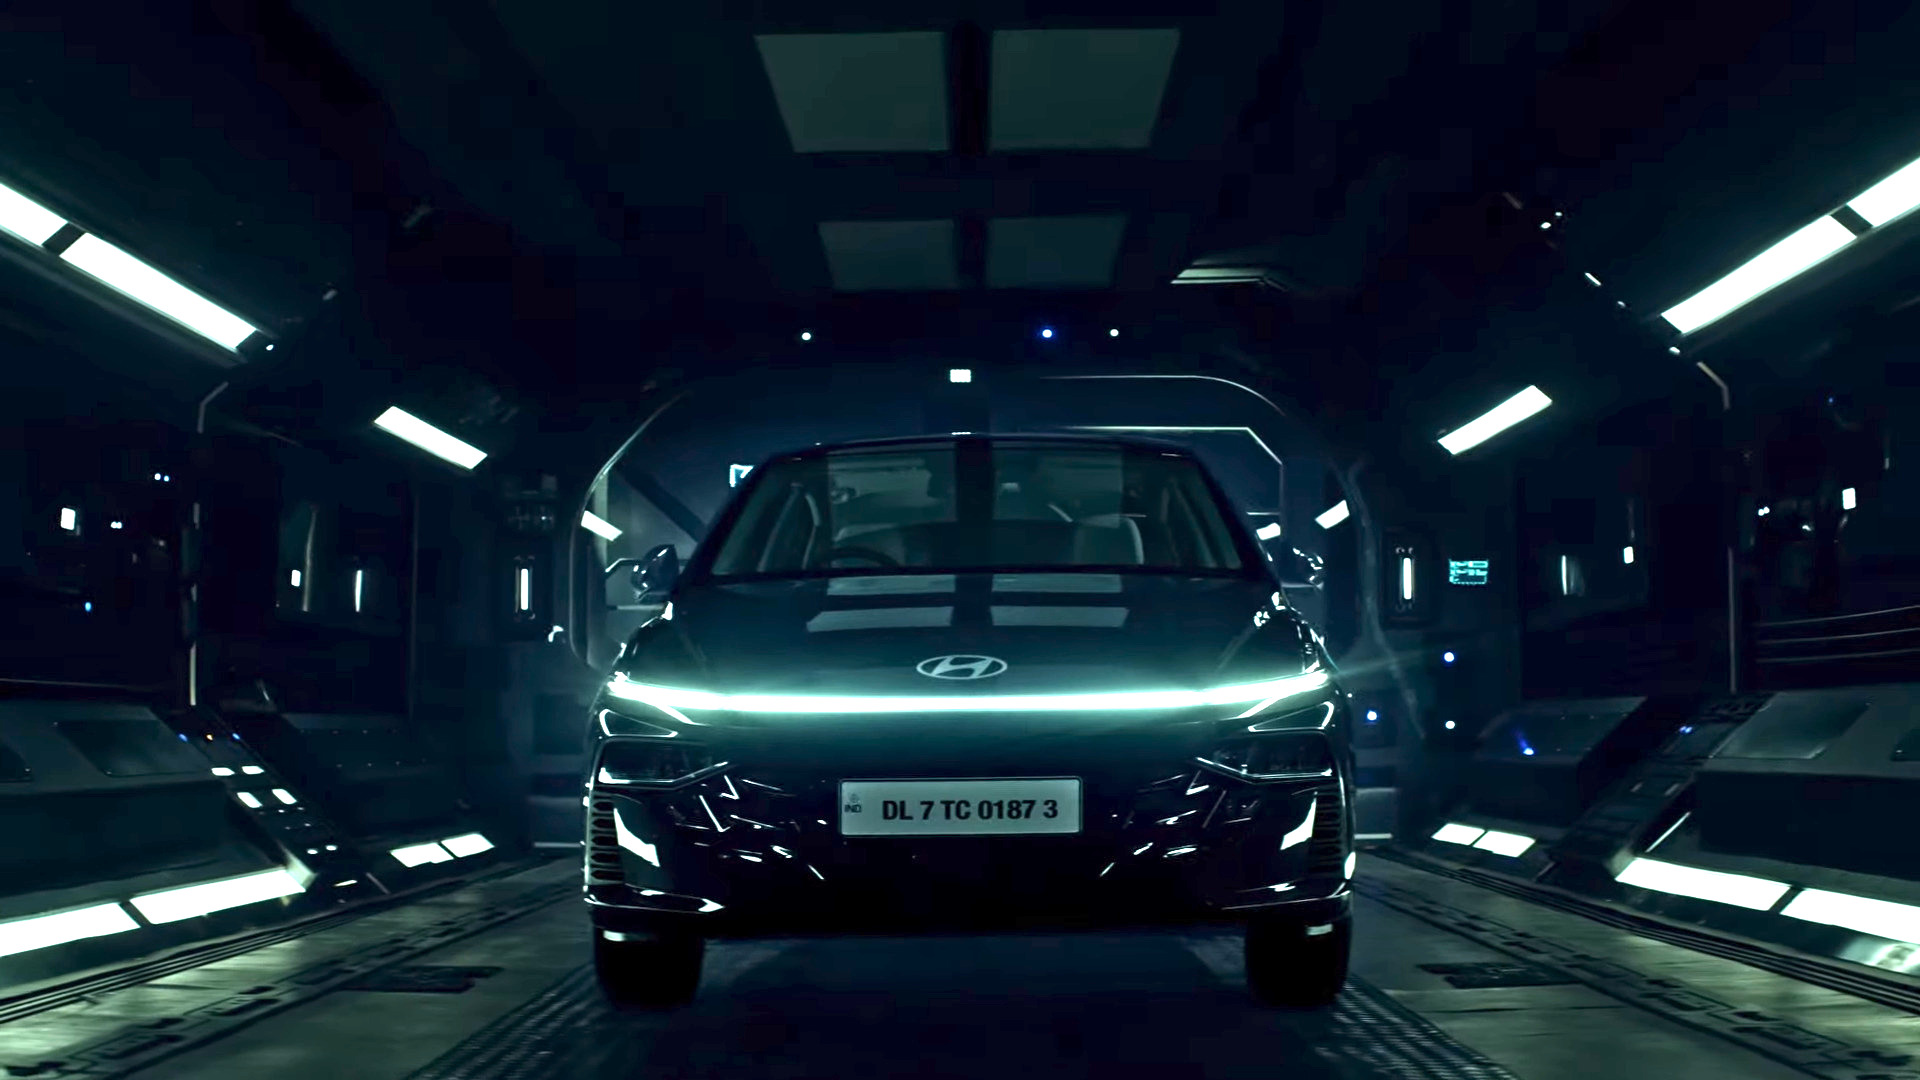 2023 Hyundai Verna Key Design Elements Officially Revealed! - macro